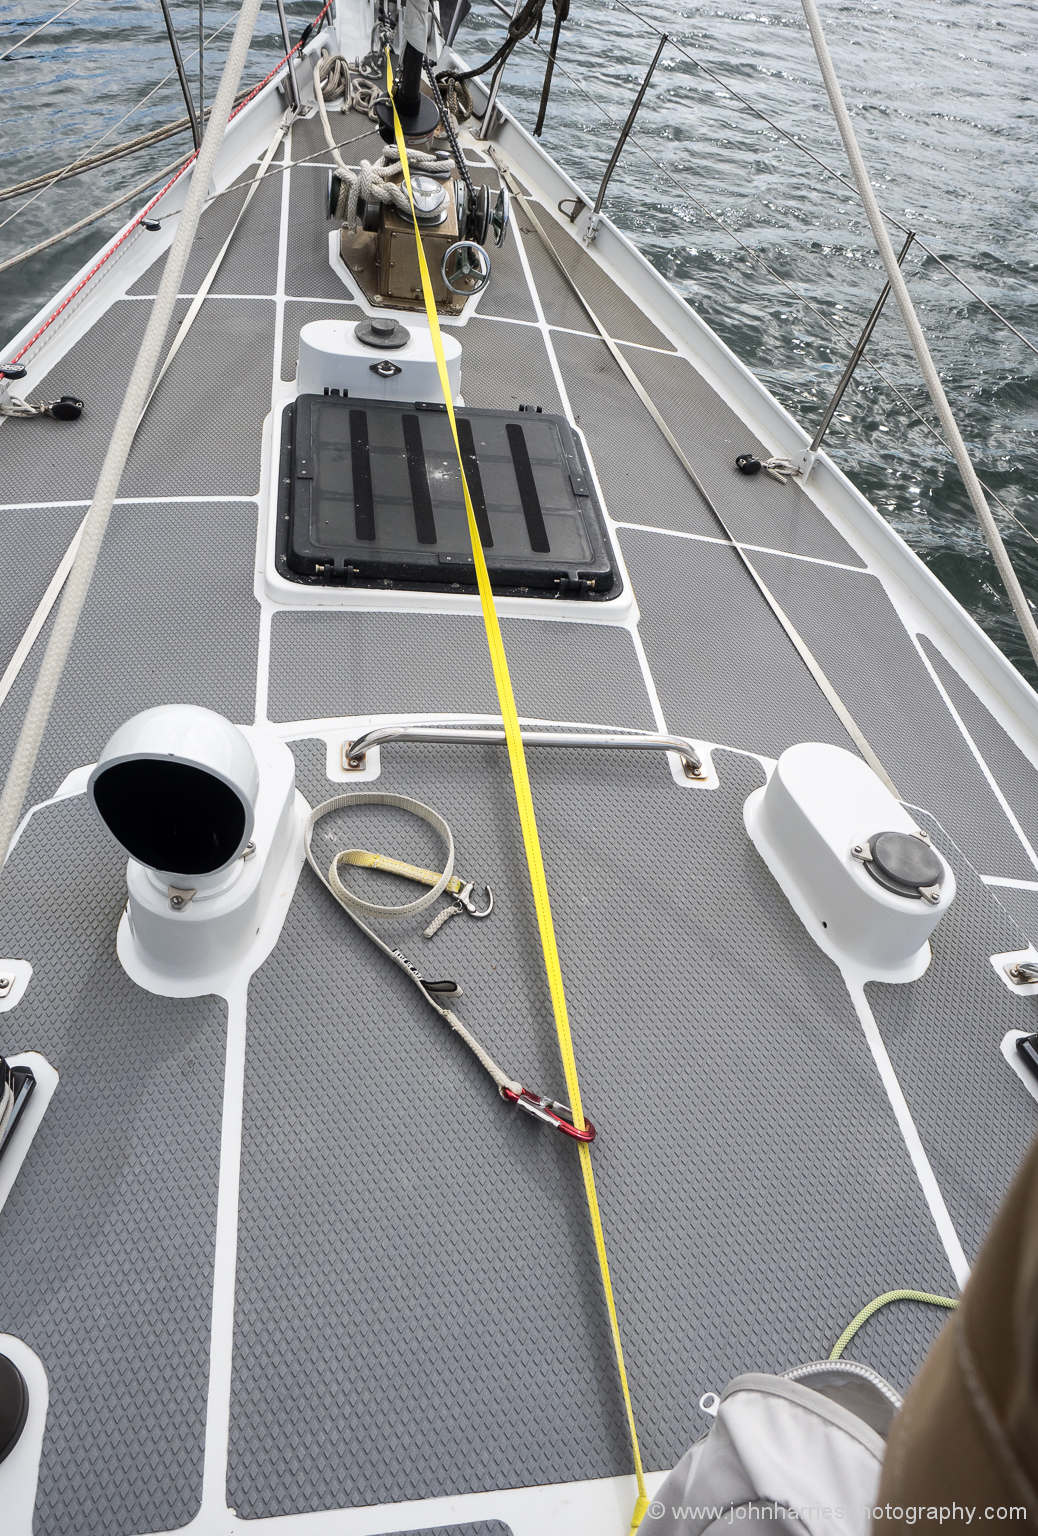 installing jack lines on sailboat